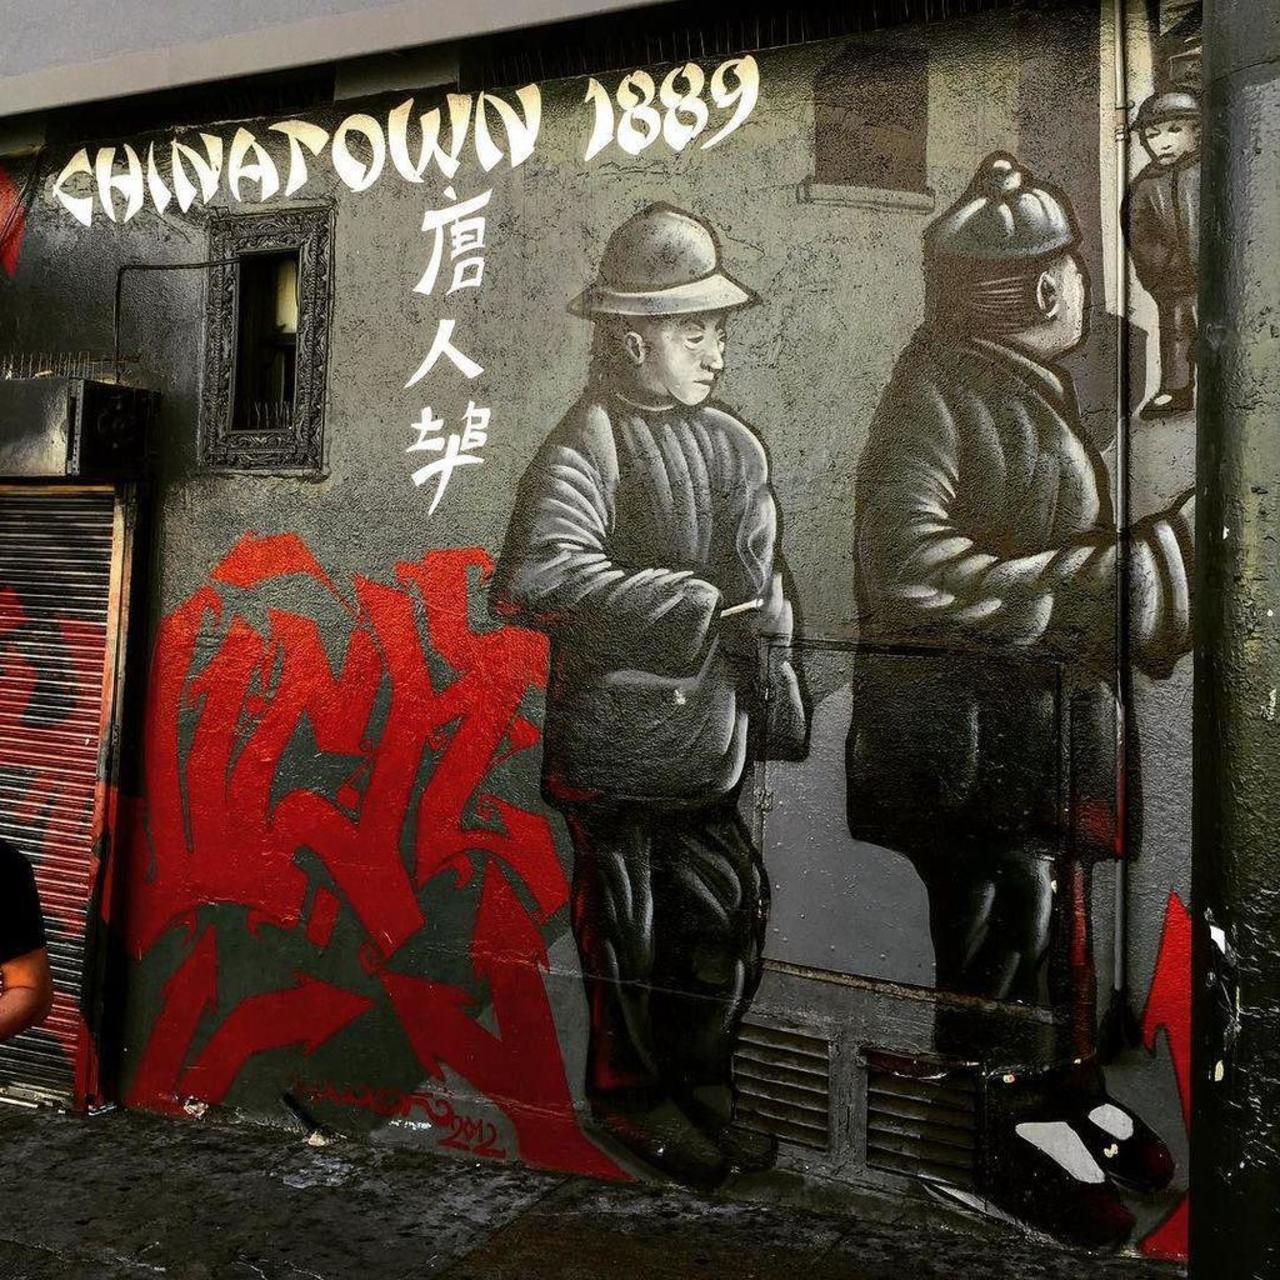 #graffiti in #chinatown 1889 #sanfrancisco #streetart #street #streetphotography #TagsForL… http://ift.tt/1PbPpgA http://t.co/2wmWd780HZ